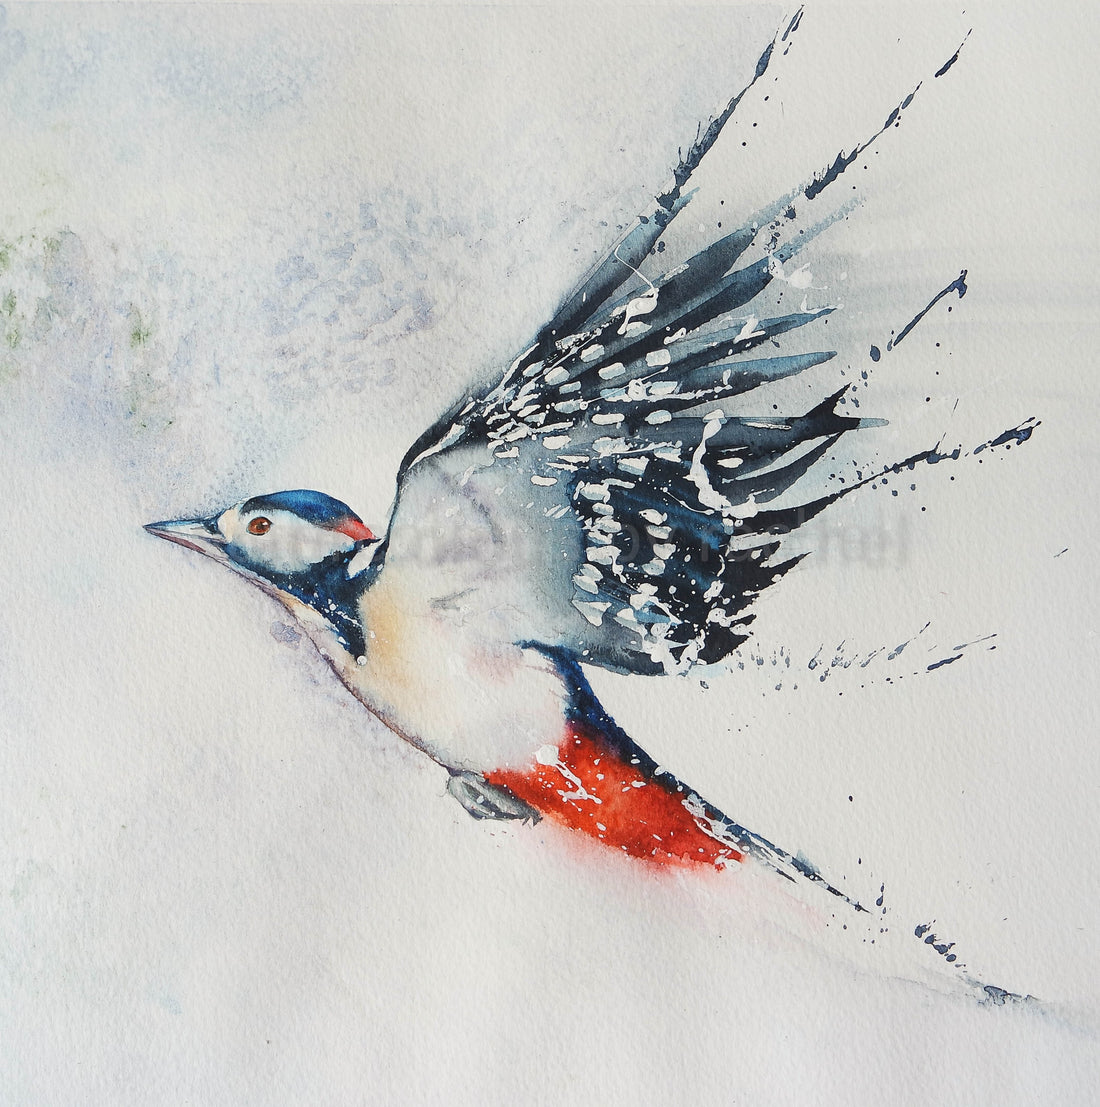 A woodpecker mid flight.